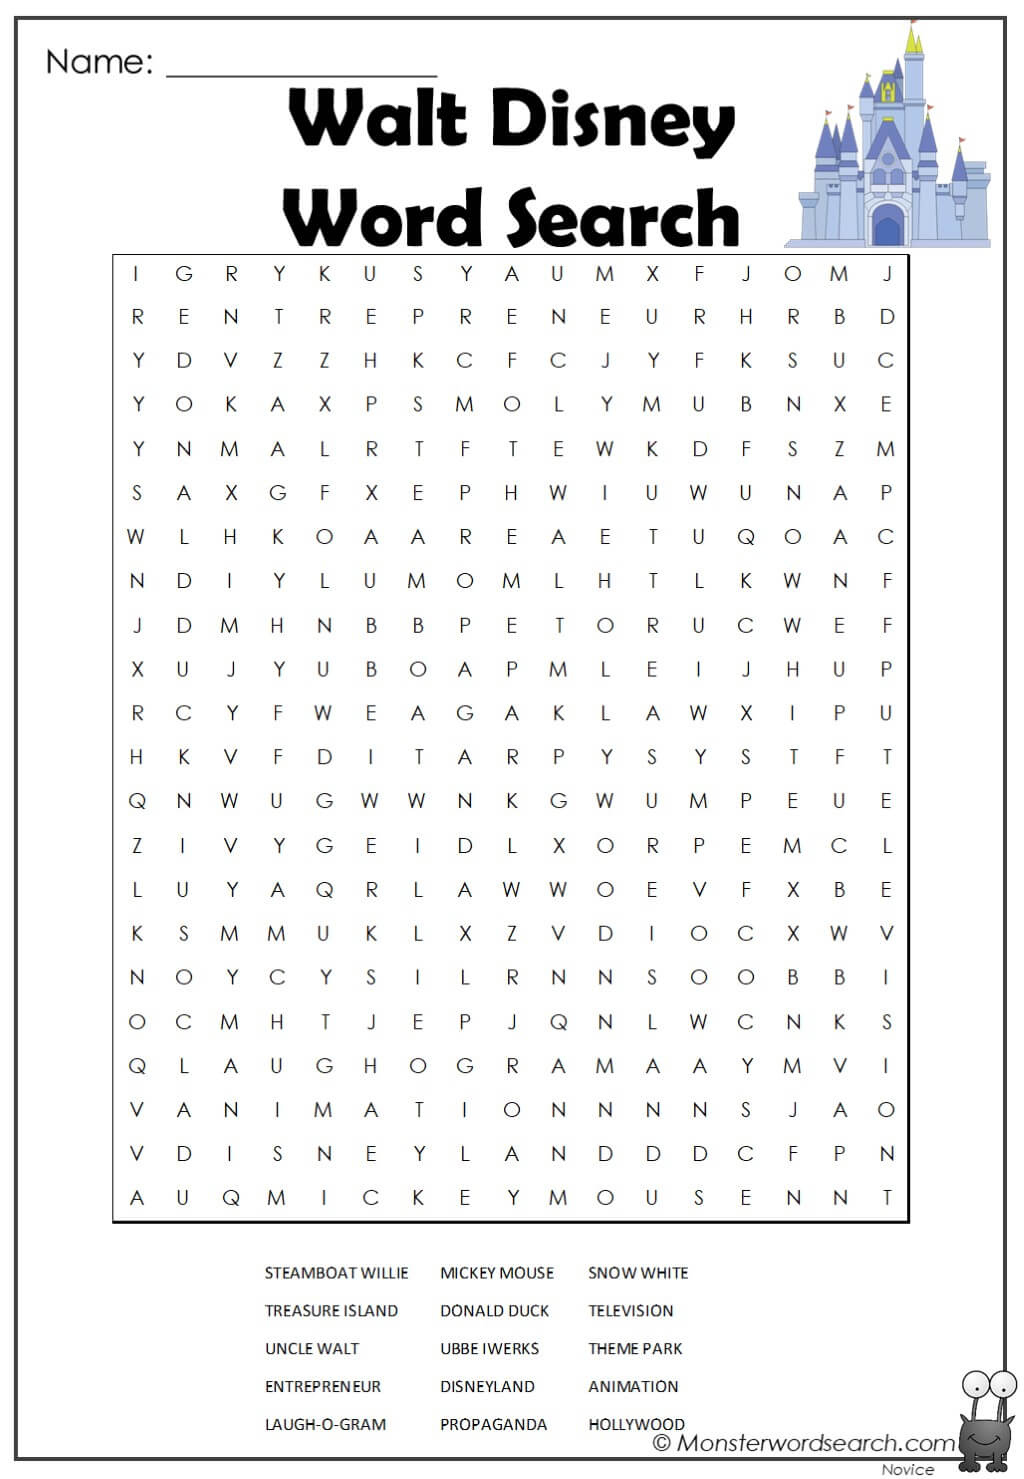 Walt Disney Word Search 1 jpg Monster Word Search